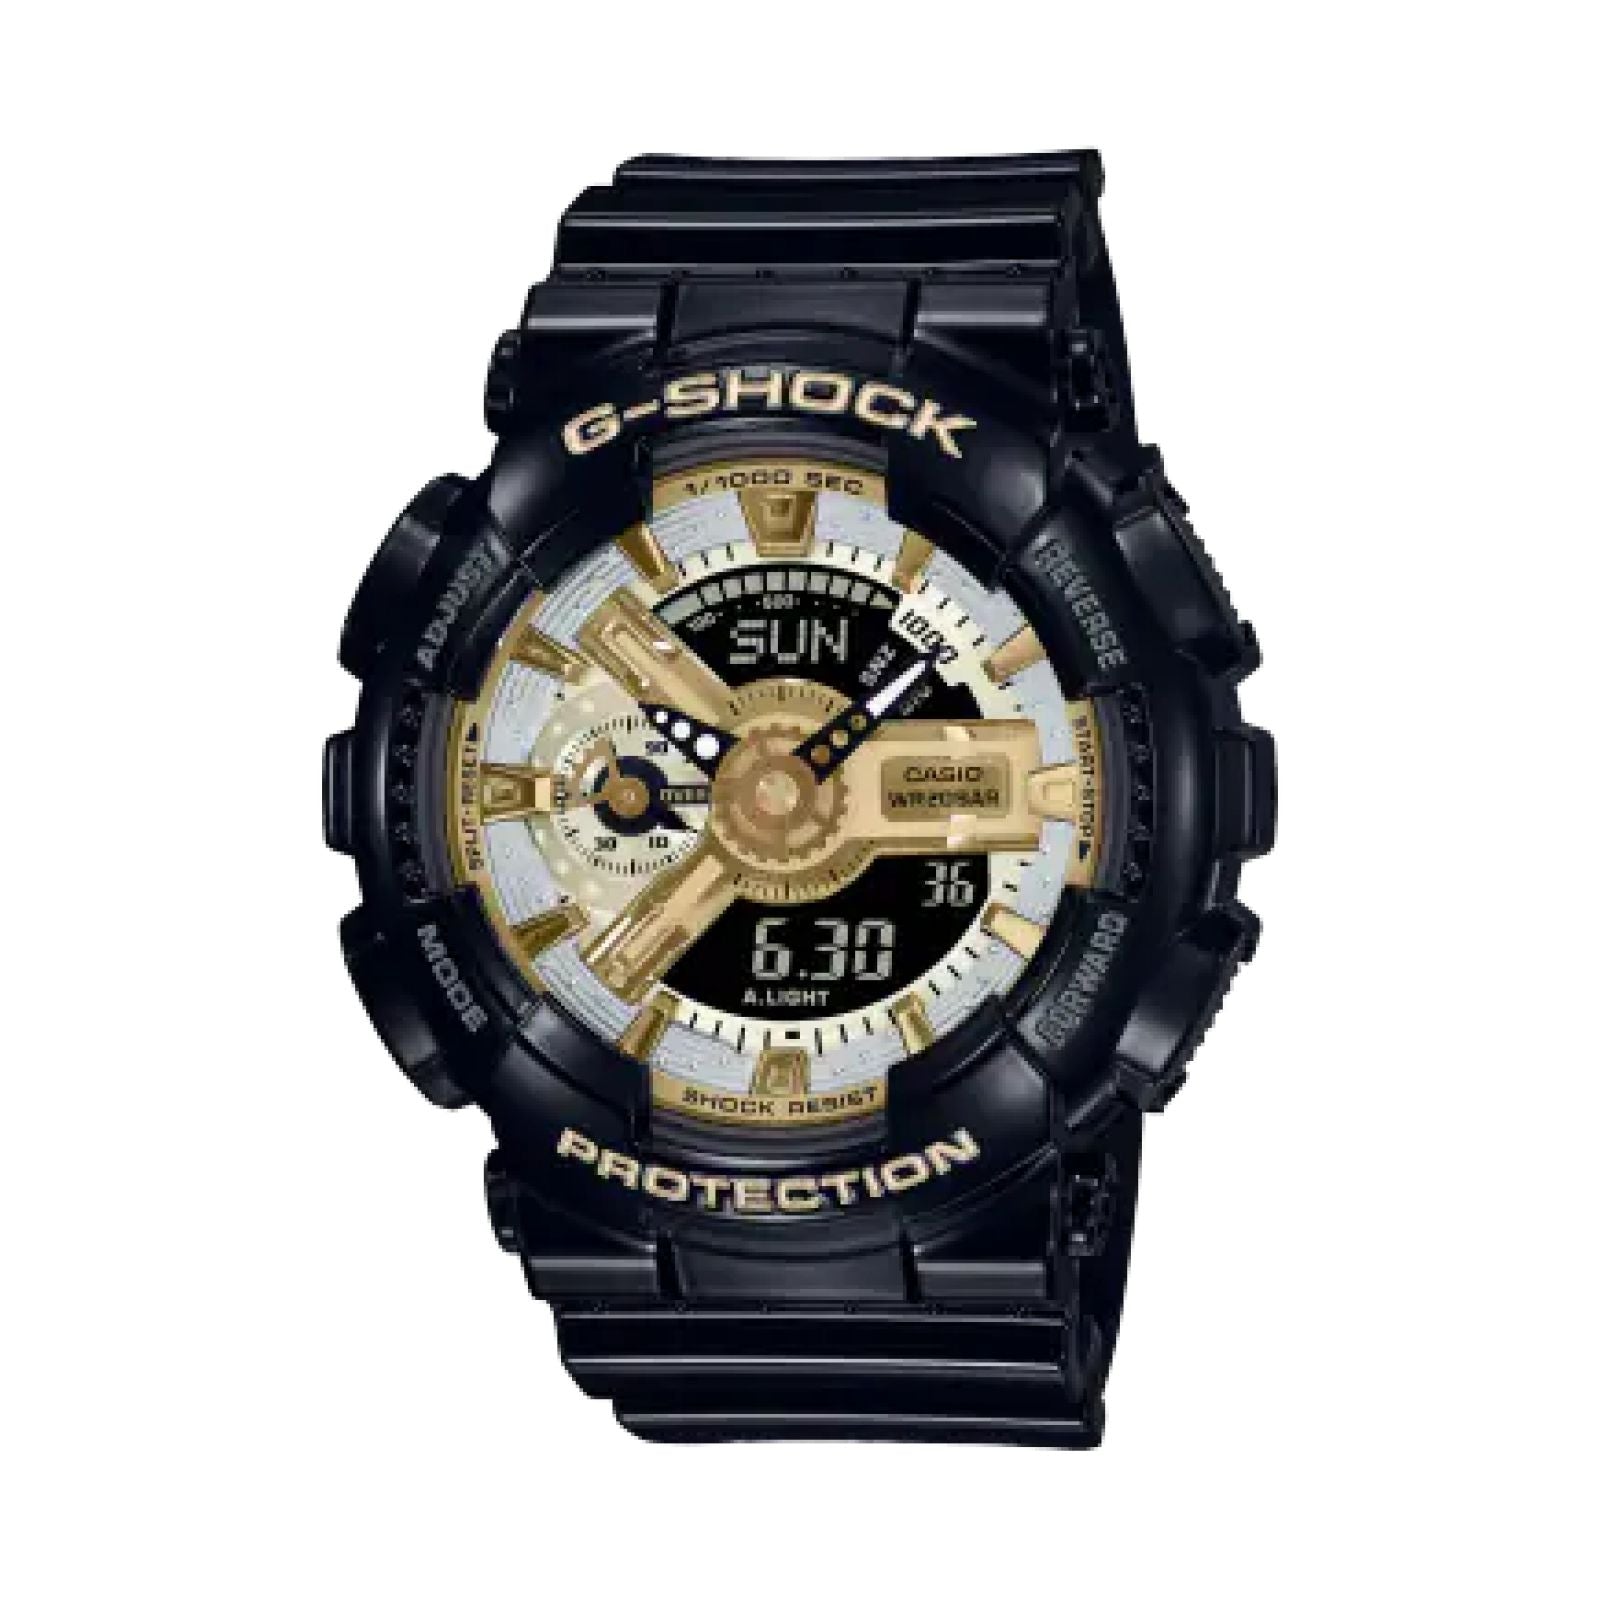 G-SHOCK Reloj G-Shock Hombre Deportivo